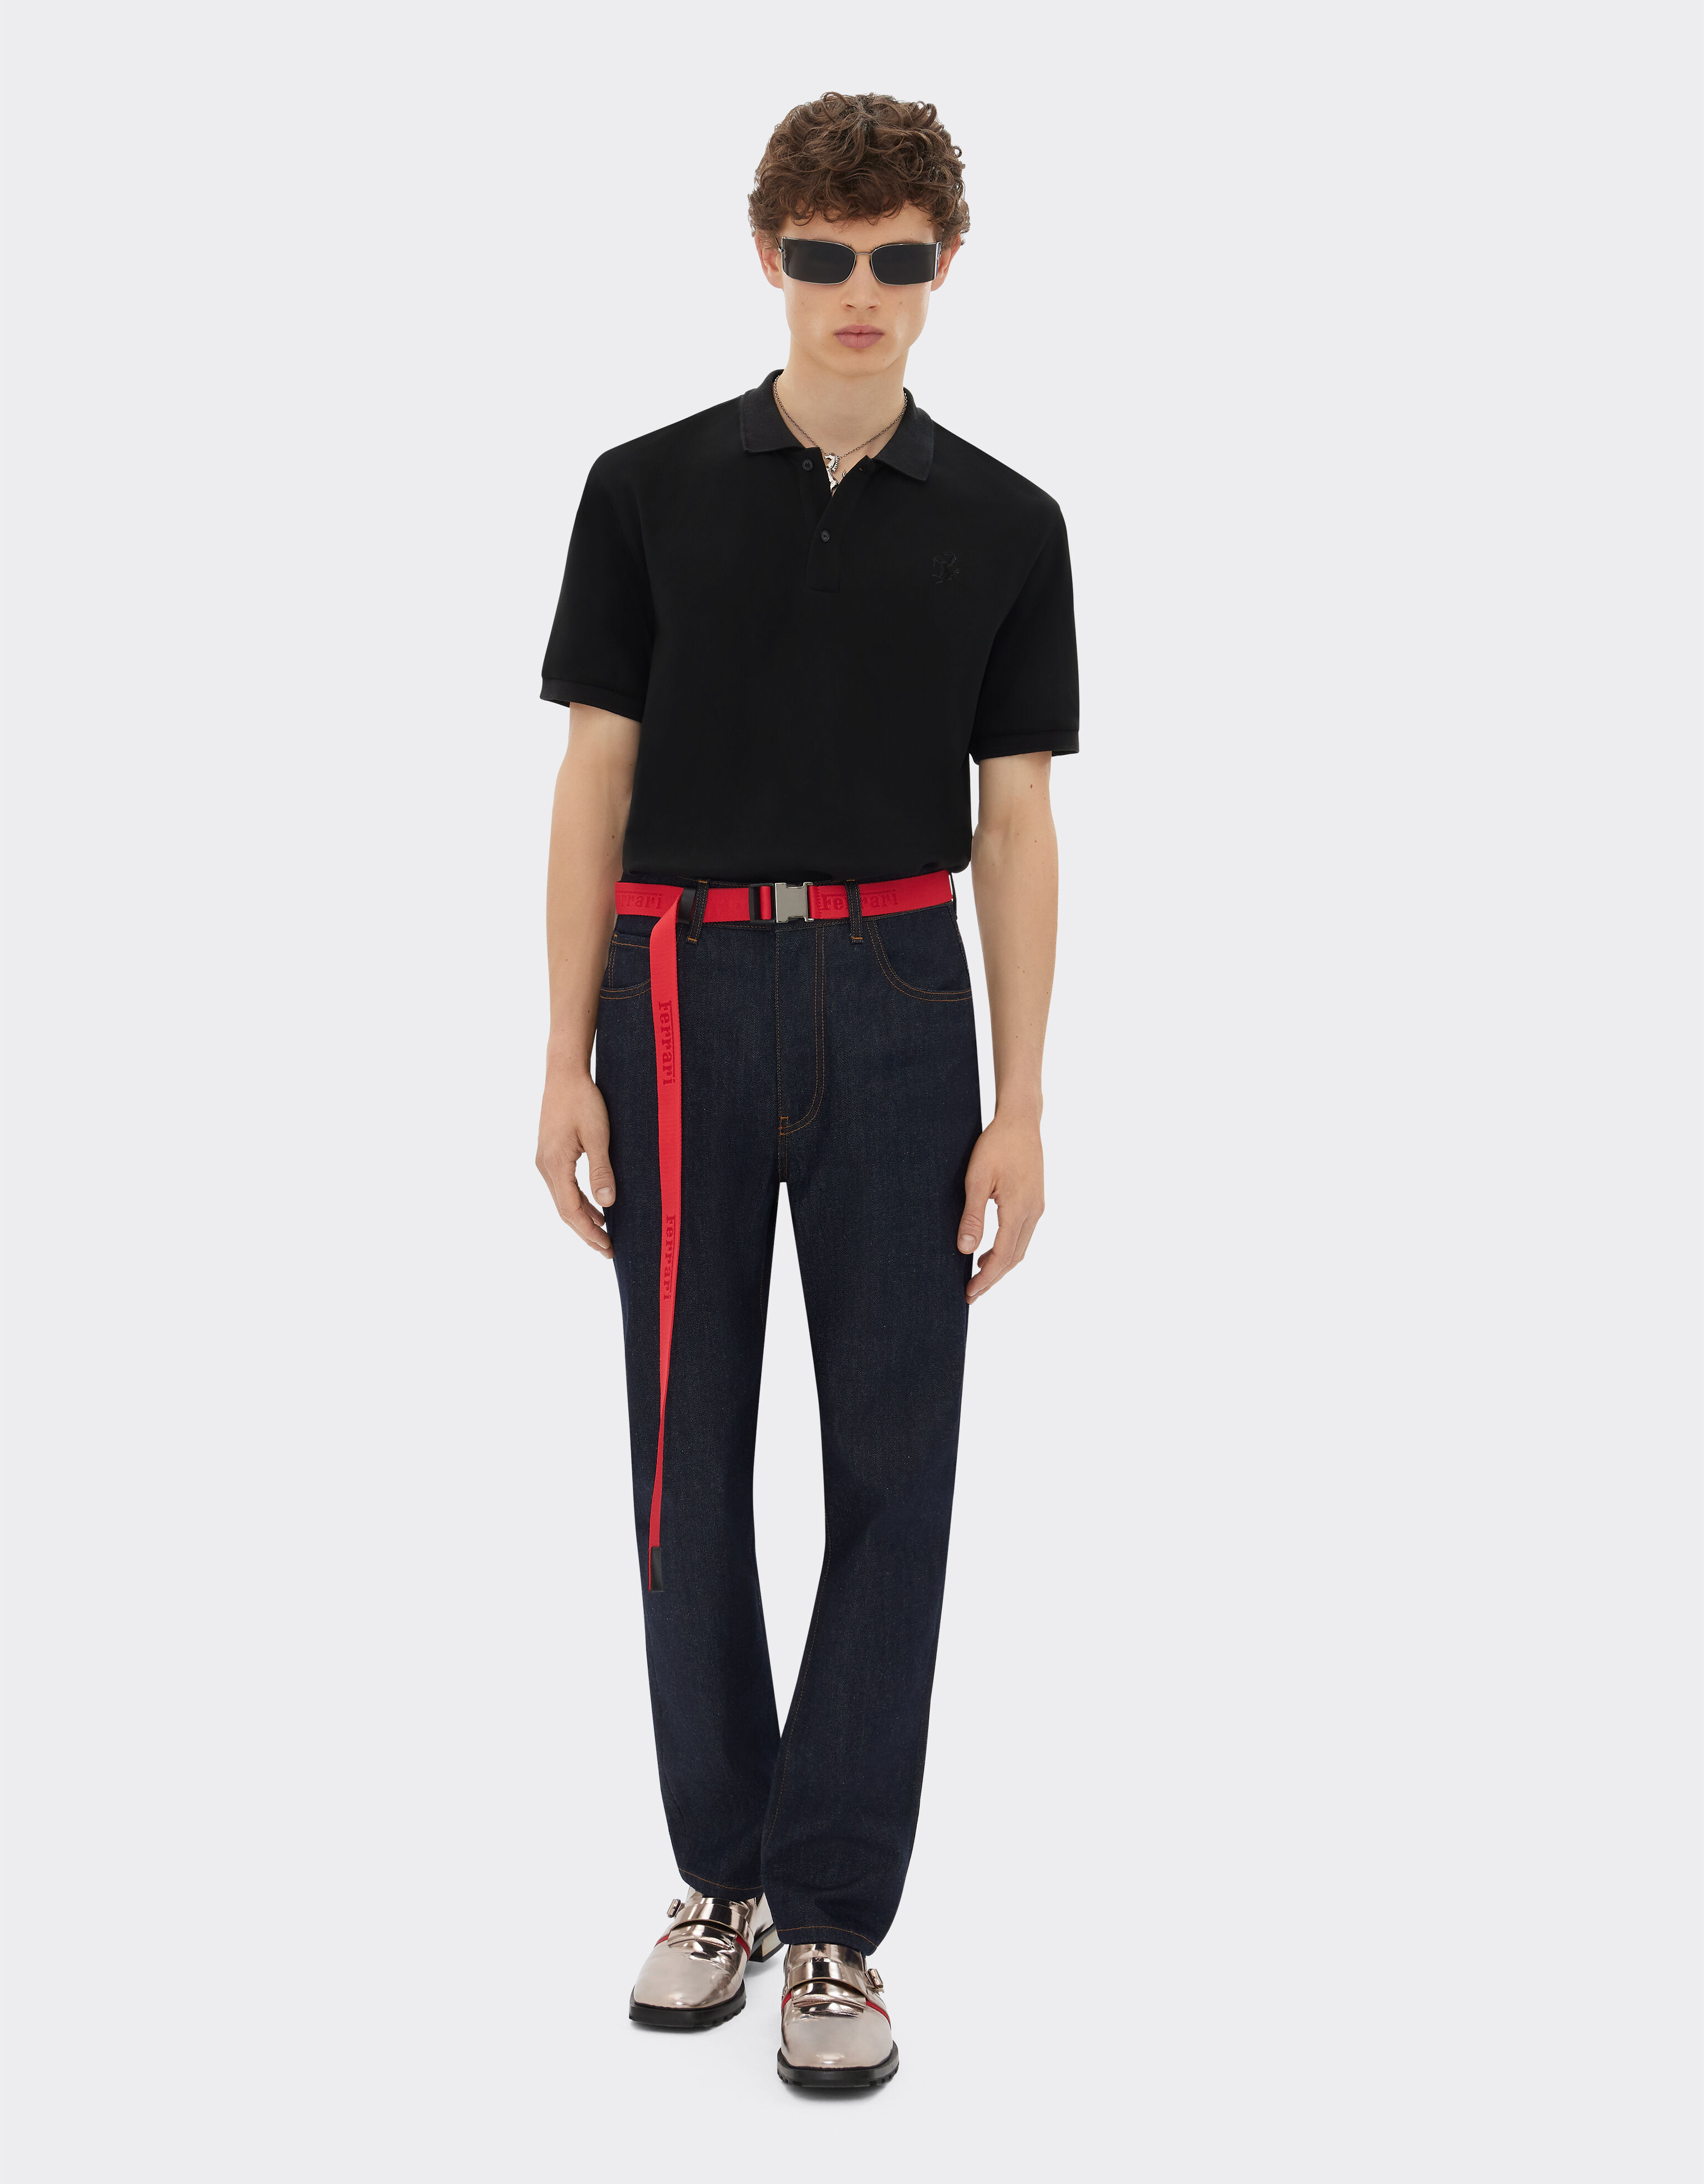 Ferrari Solid-colour polo shirt in piqué cotton Black 47822f